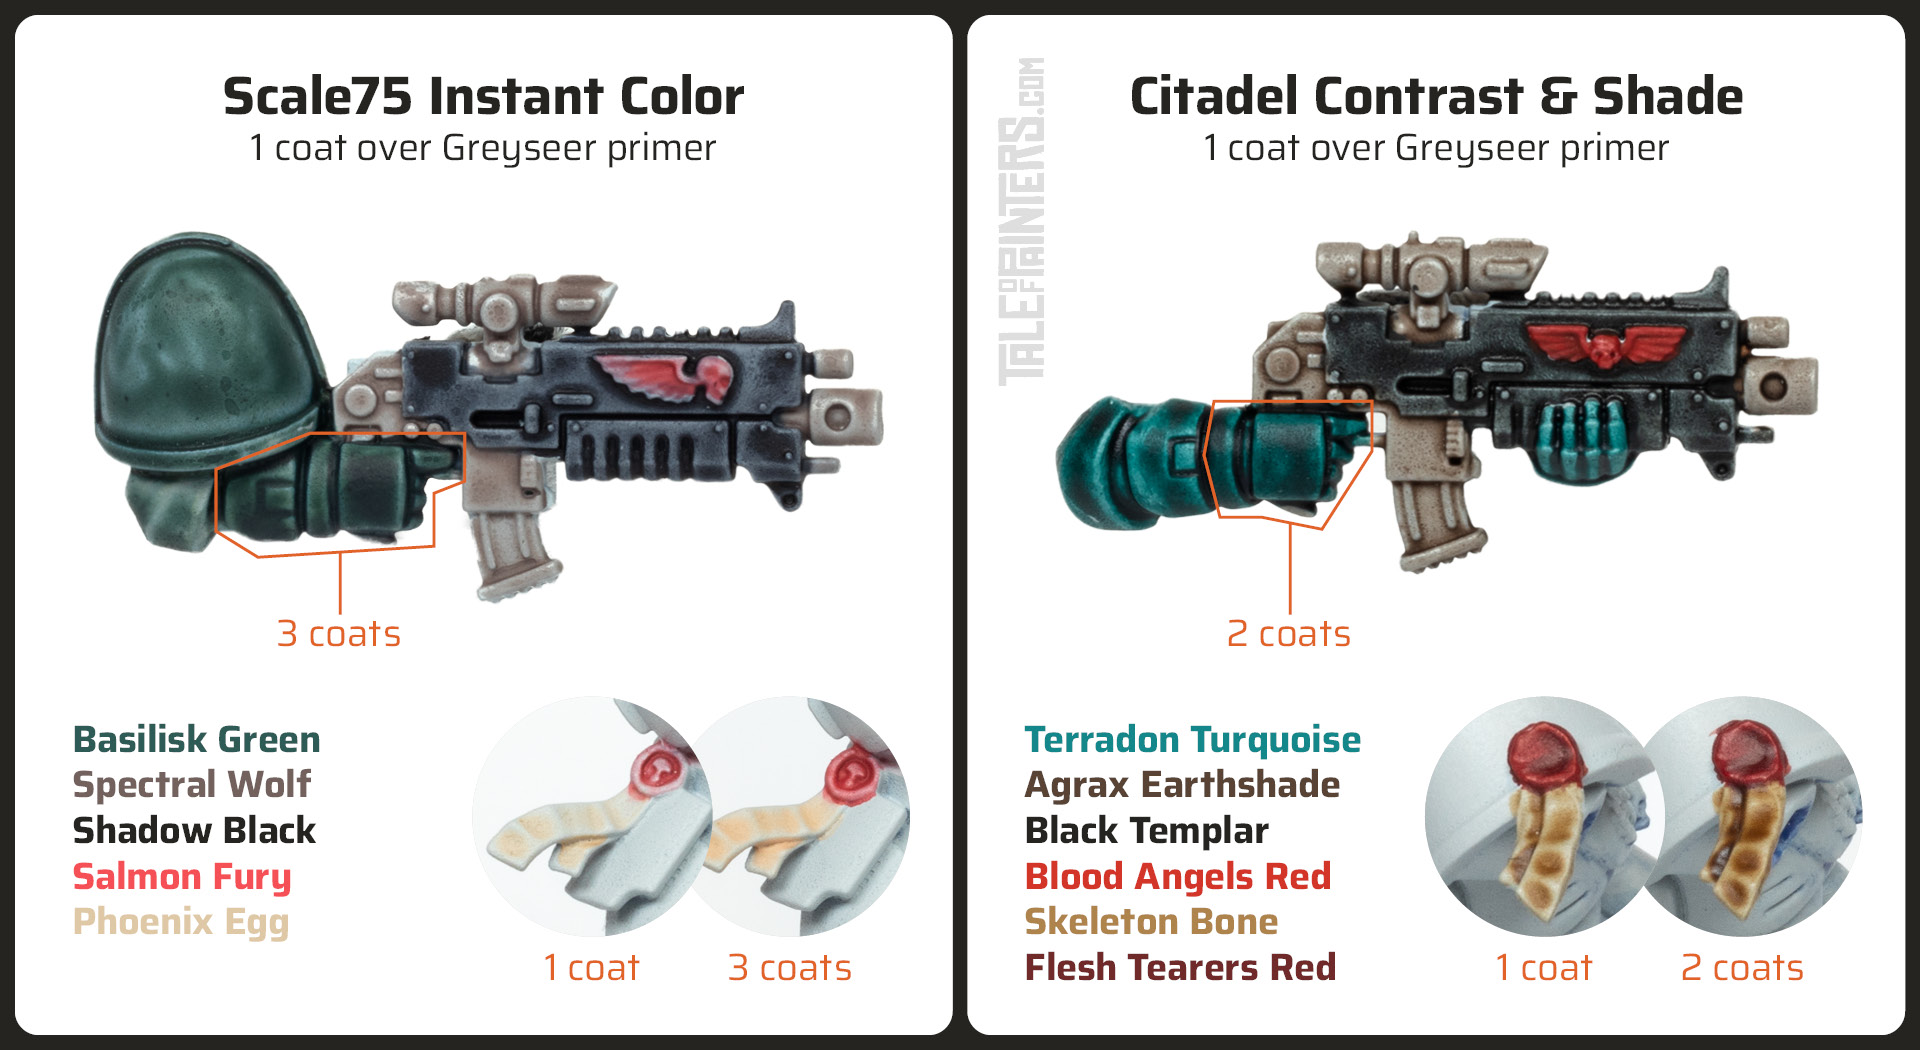 Scale75 Instant Color vs Citadel Contrast Comparison